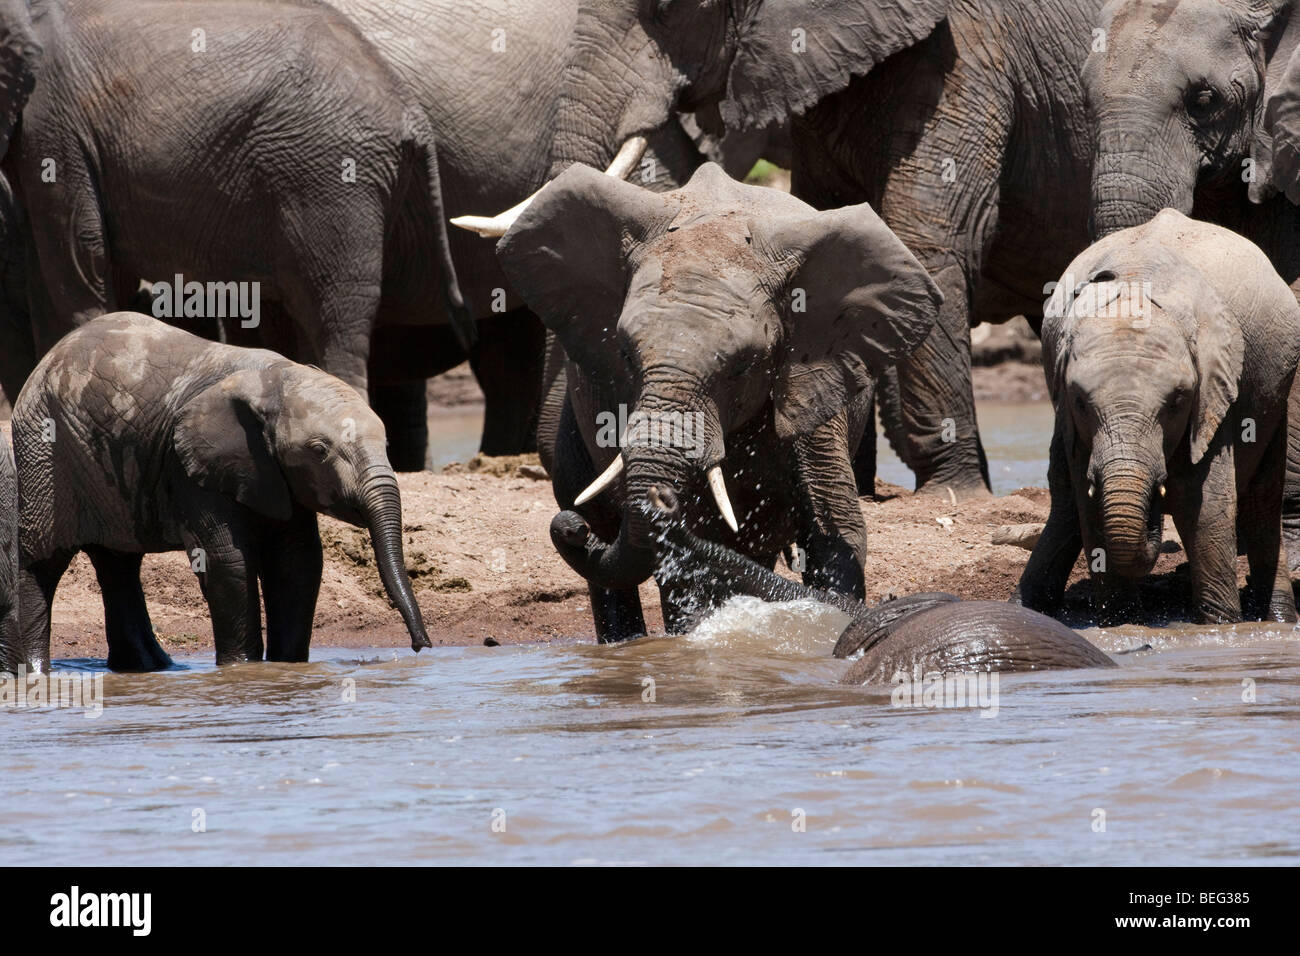 Grandi mandrie di elefanti a riverbank, Baby Elephant acqua potabile, balneazione, adulti scuotendo la testa,1 elephant sott'acqua nel fiume Masai Mara, Kenya Foto Stock